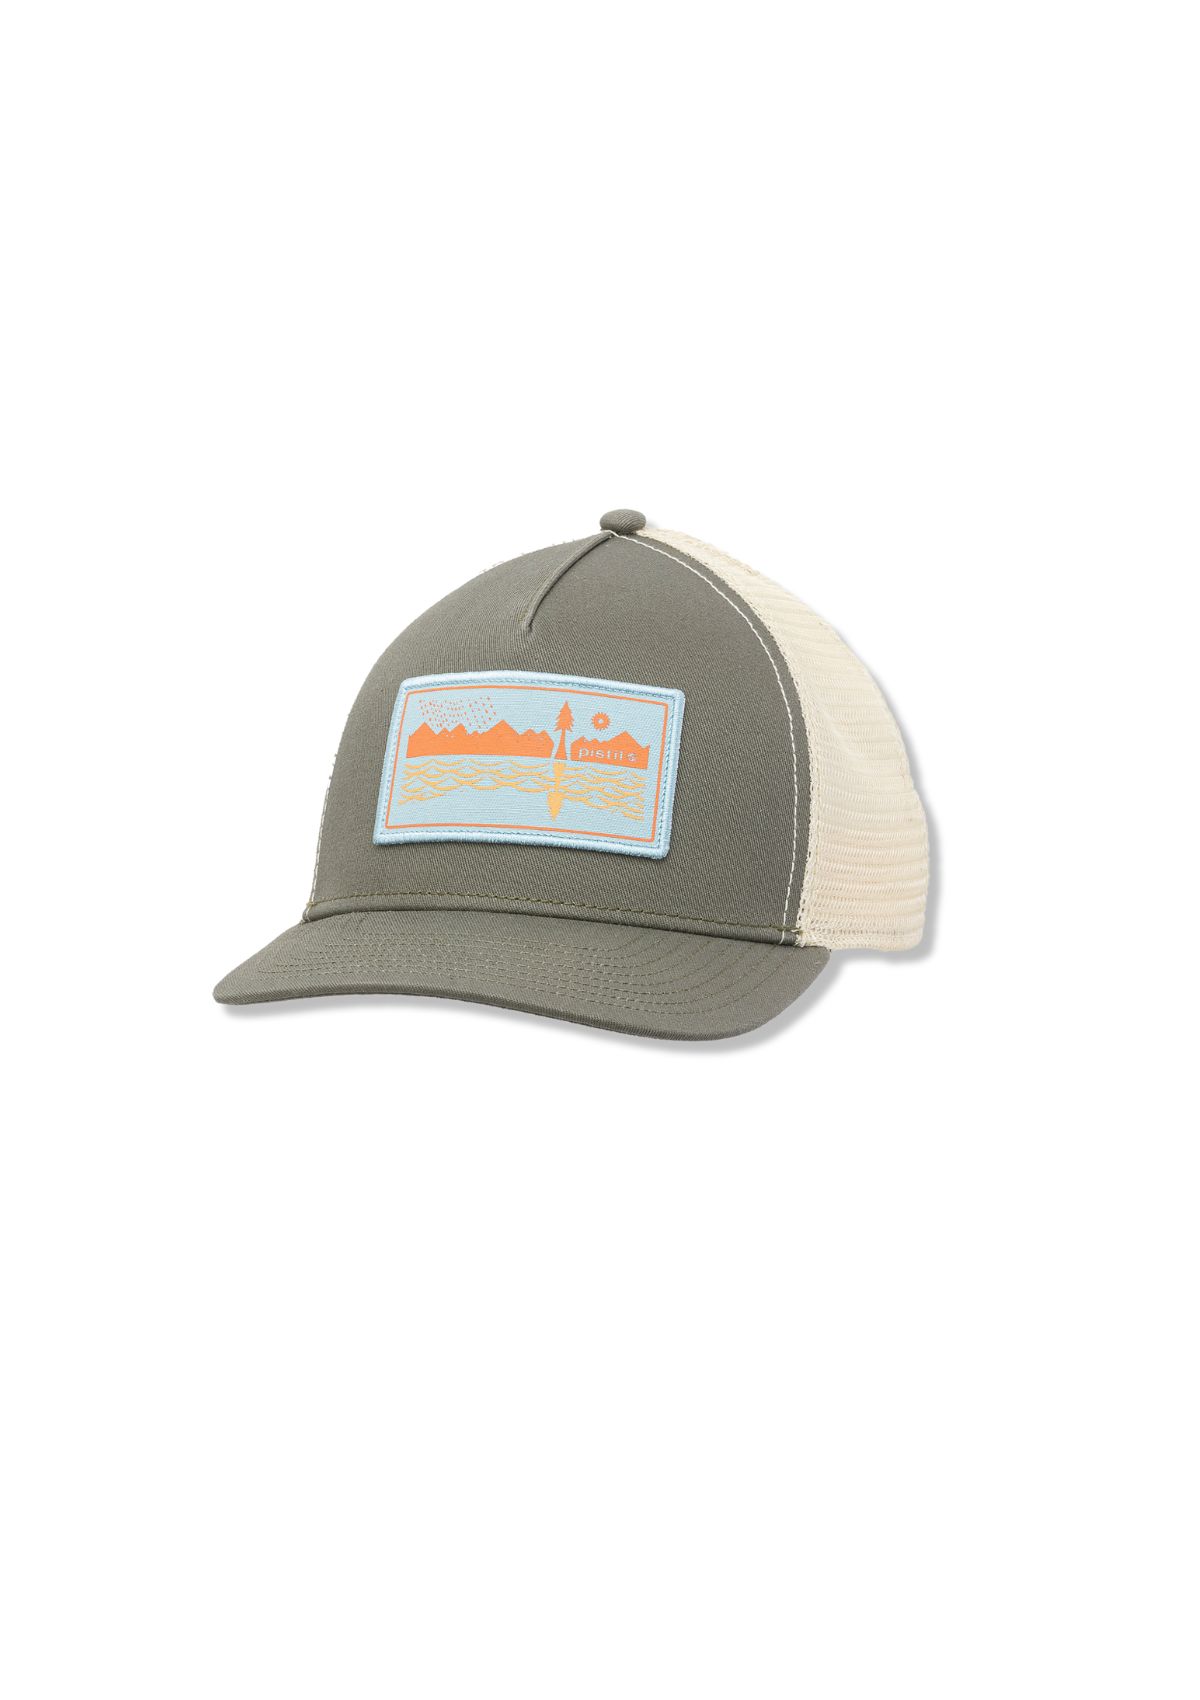 Valley Girl Trucker Hat - Army -Pistil /Fox River/ FTP Designs / Isotoner / Totes- Ruby Jane-